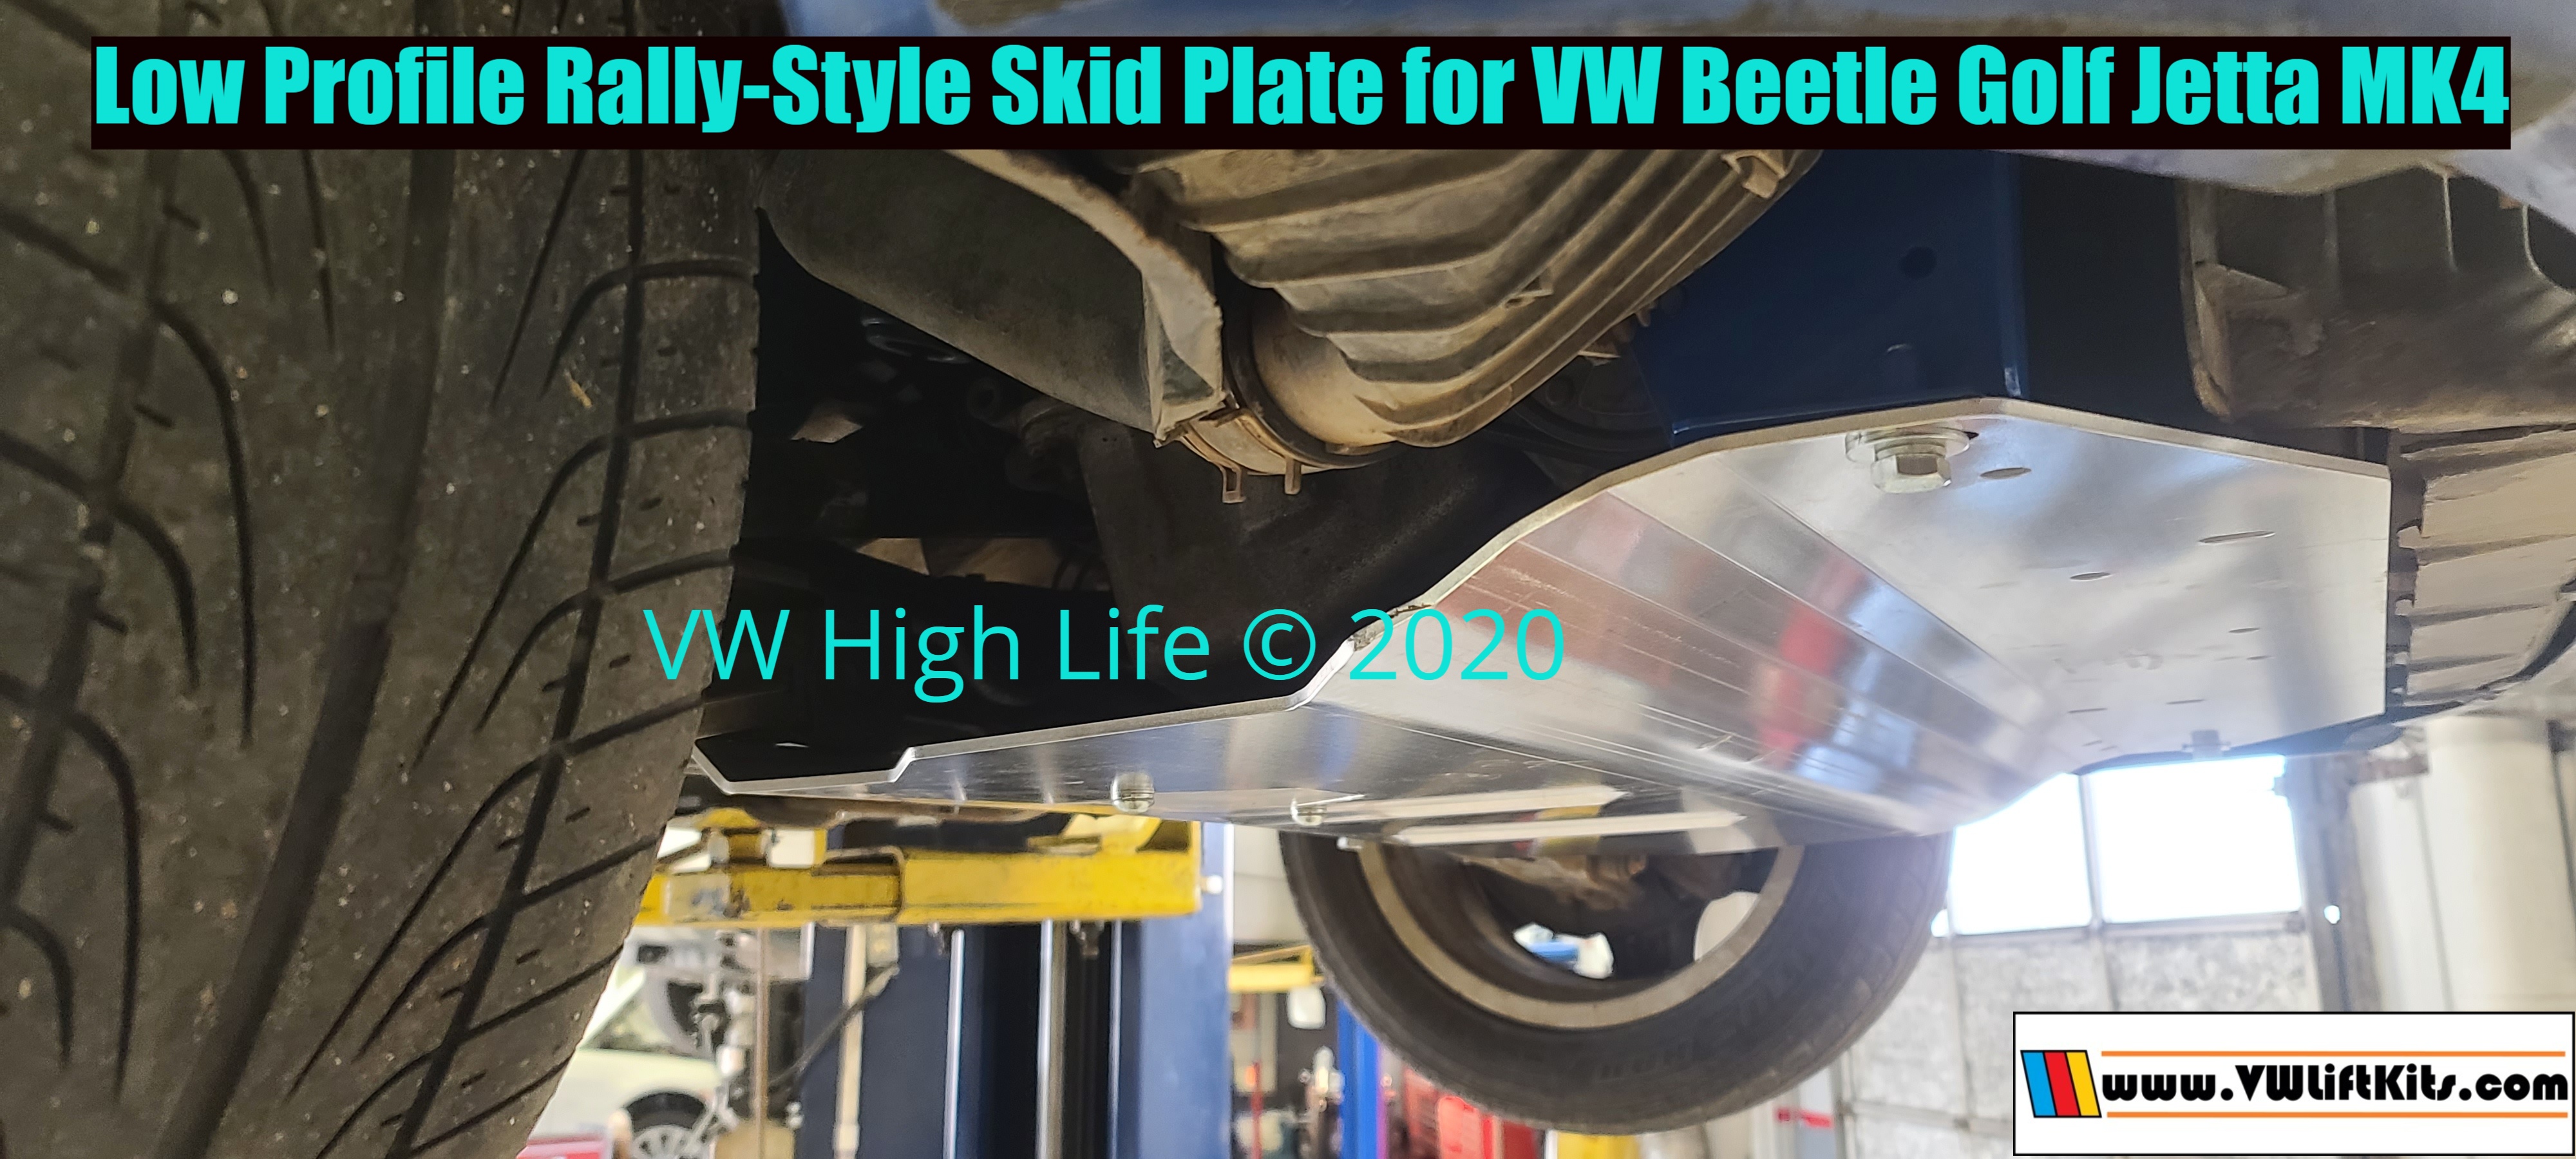 Lift Kit Suspension for VW Golf MK4 Jetta MKIV w/ Rally Skid Plate Bilstein